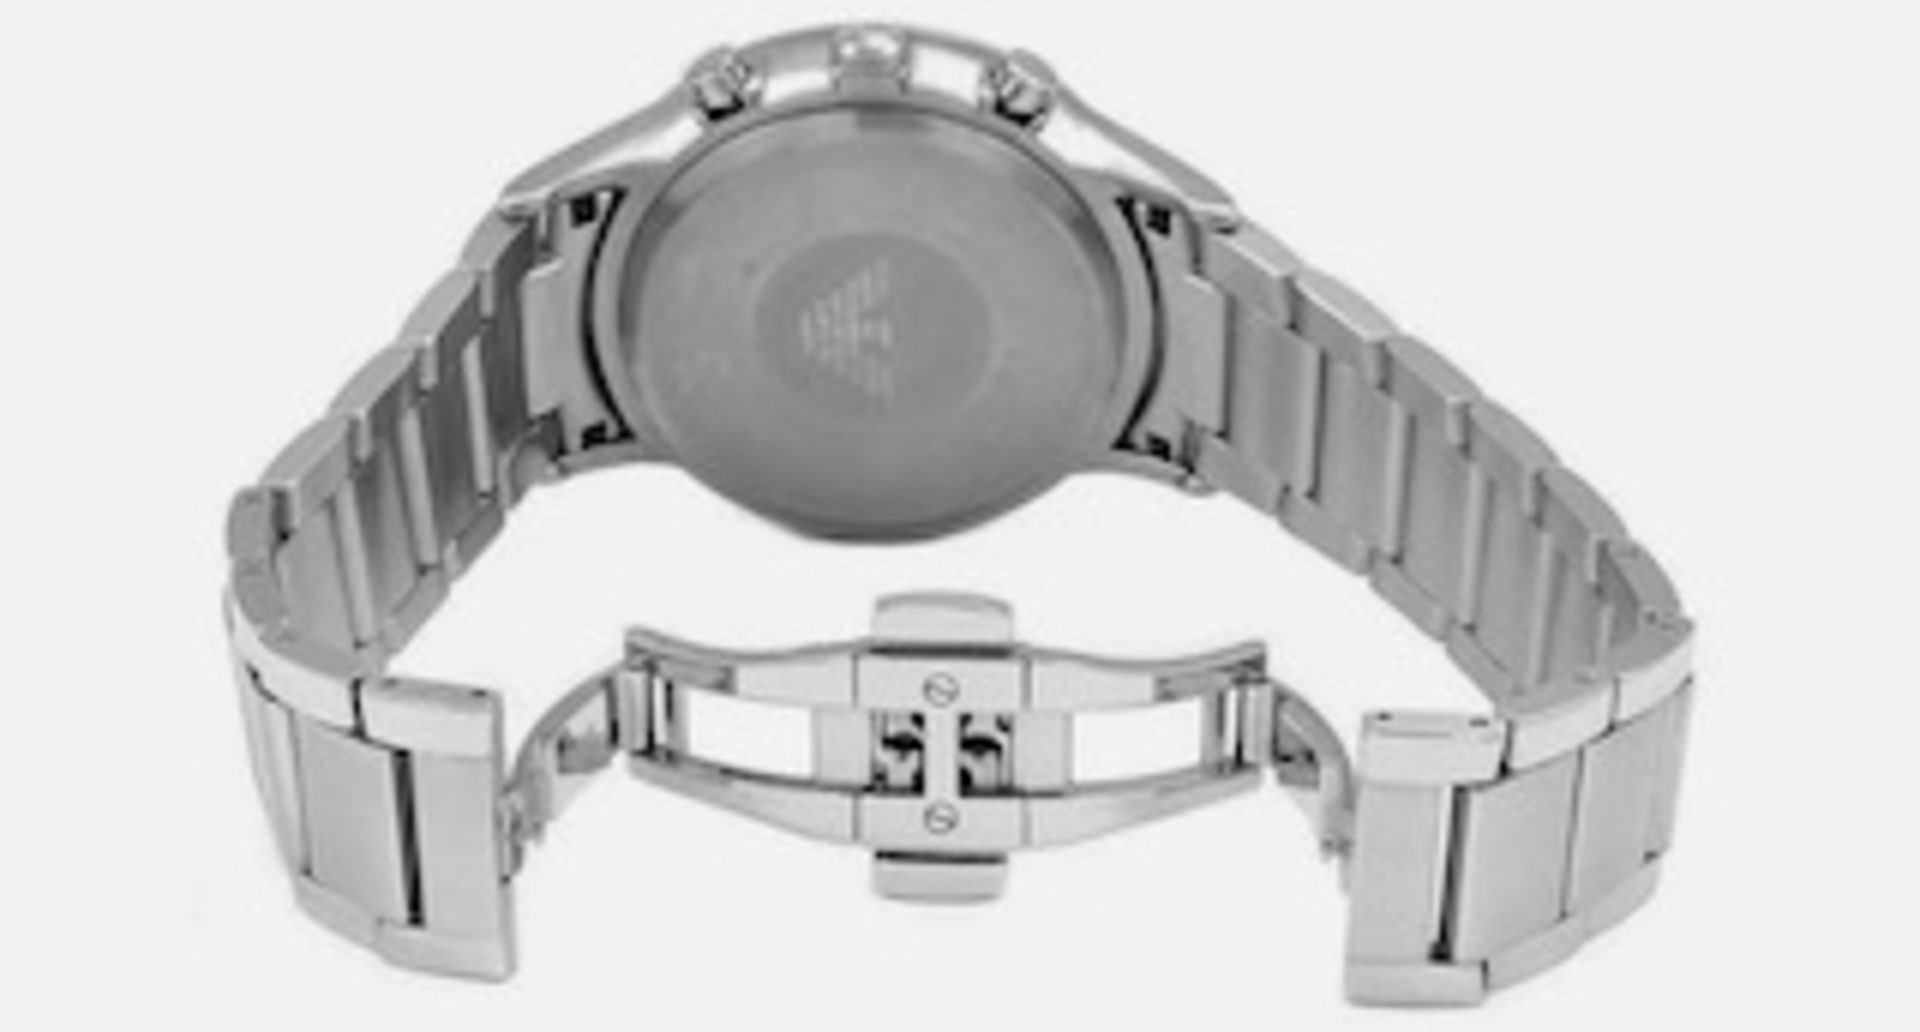 Emporio Armani AR2448 Men's Blue Dial Silver Bracelet Chronograph Watch - Image 2 of 7